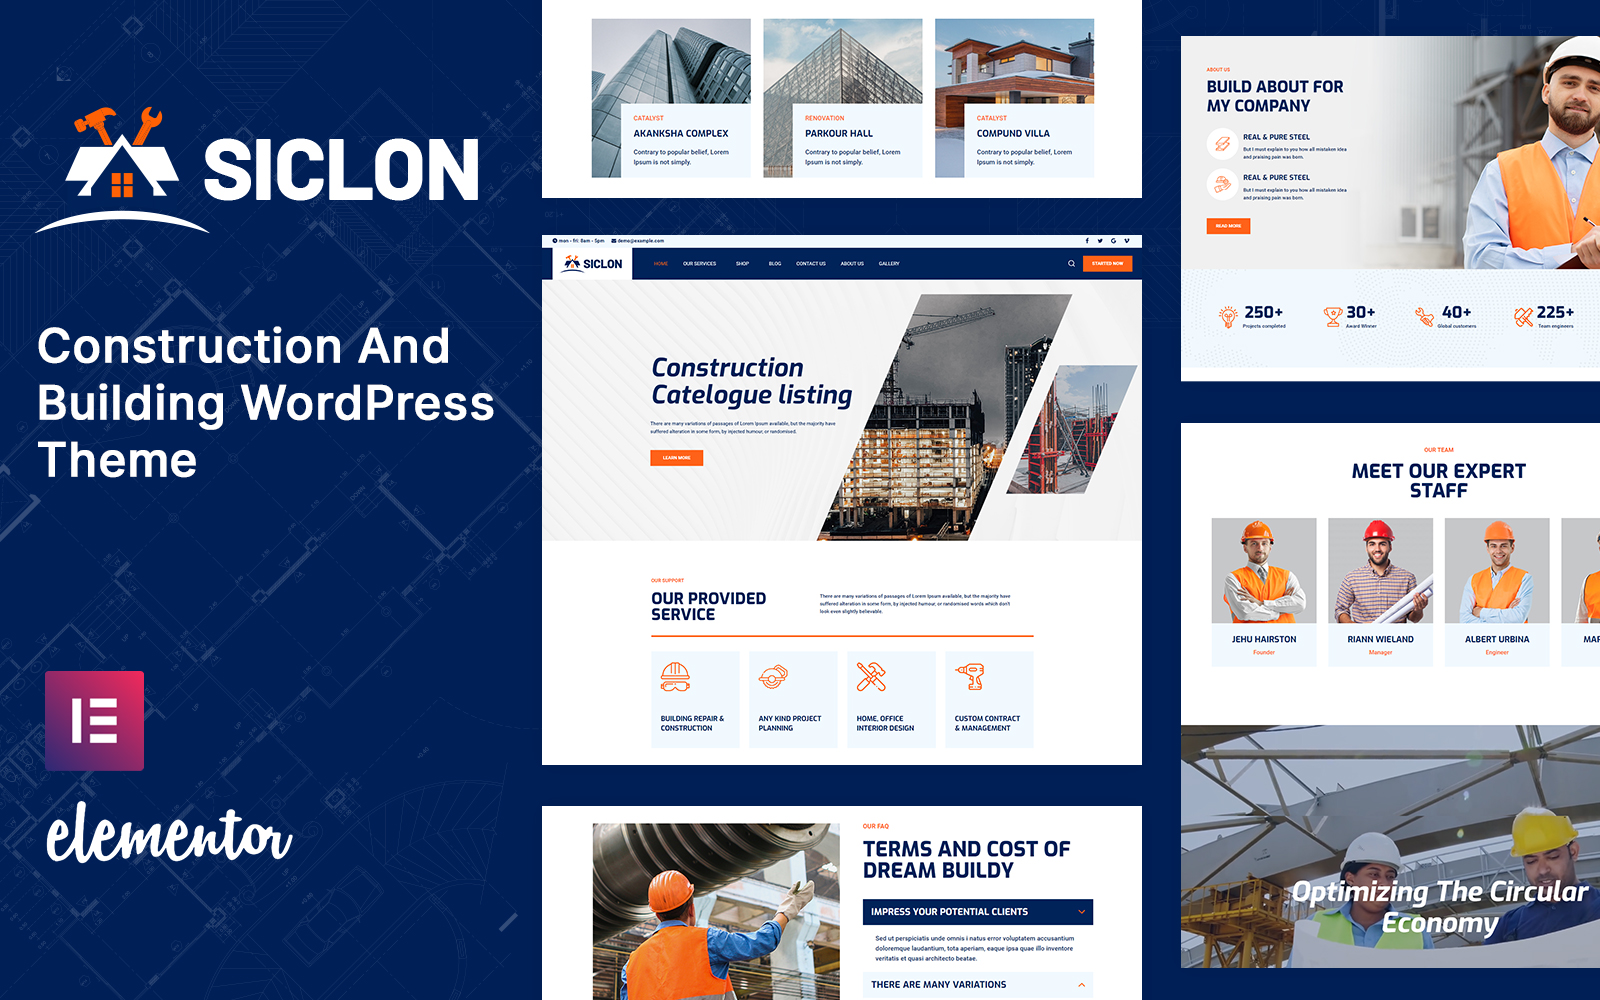 Siclon Architecture, Interior Design, Industry and Construction WordPress Theme